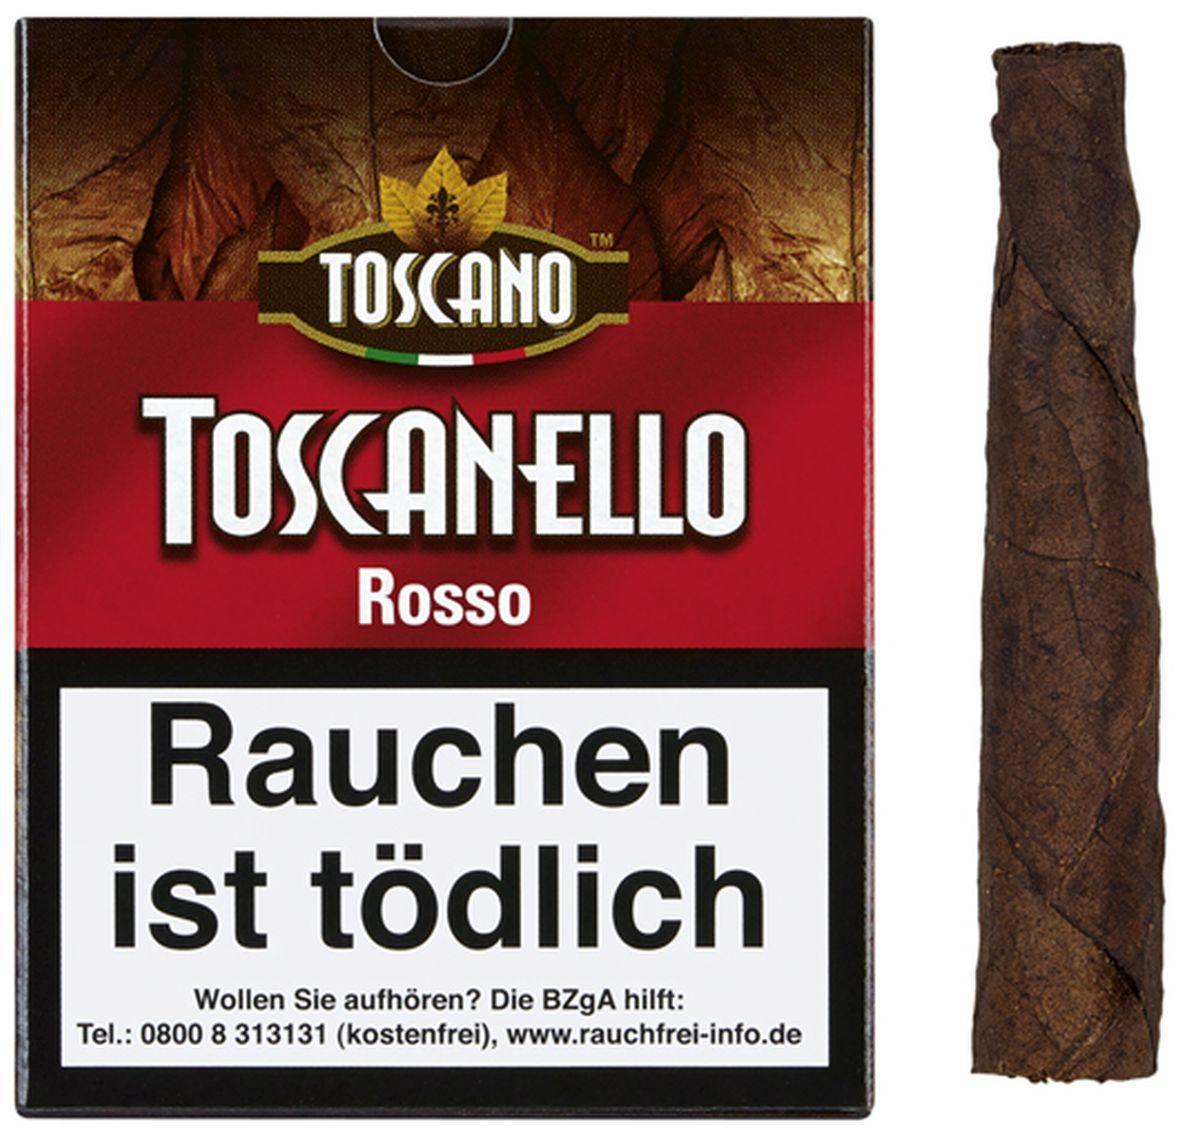 Toscano Toscanello Rosso 10 x 5 Zigarillos